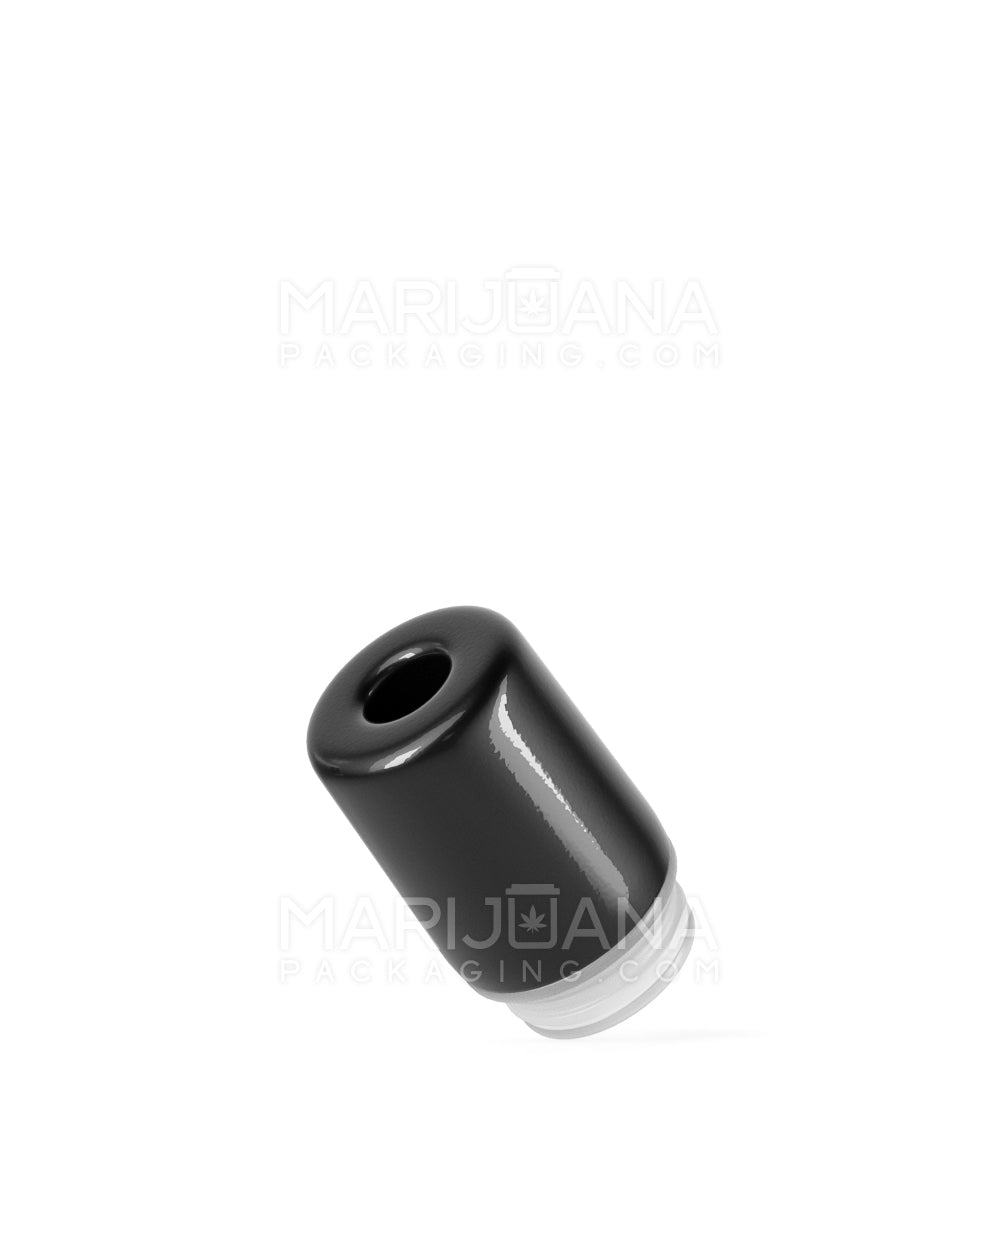 AVD | Barrel Vape Mouthpiece for Glass Cartridges | Black Ceramic - Eazy Press - 600 Count - 4